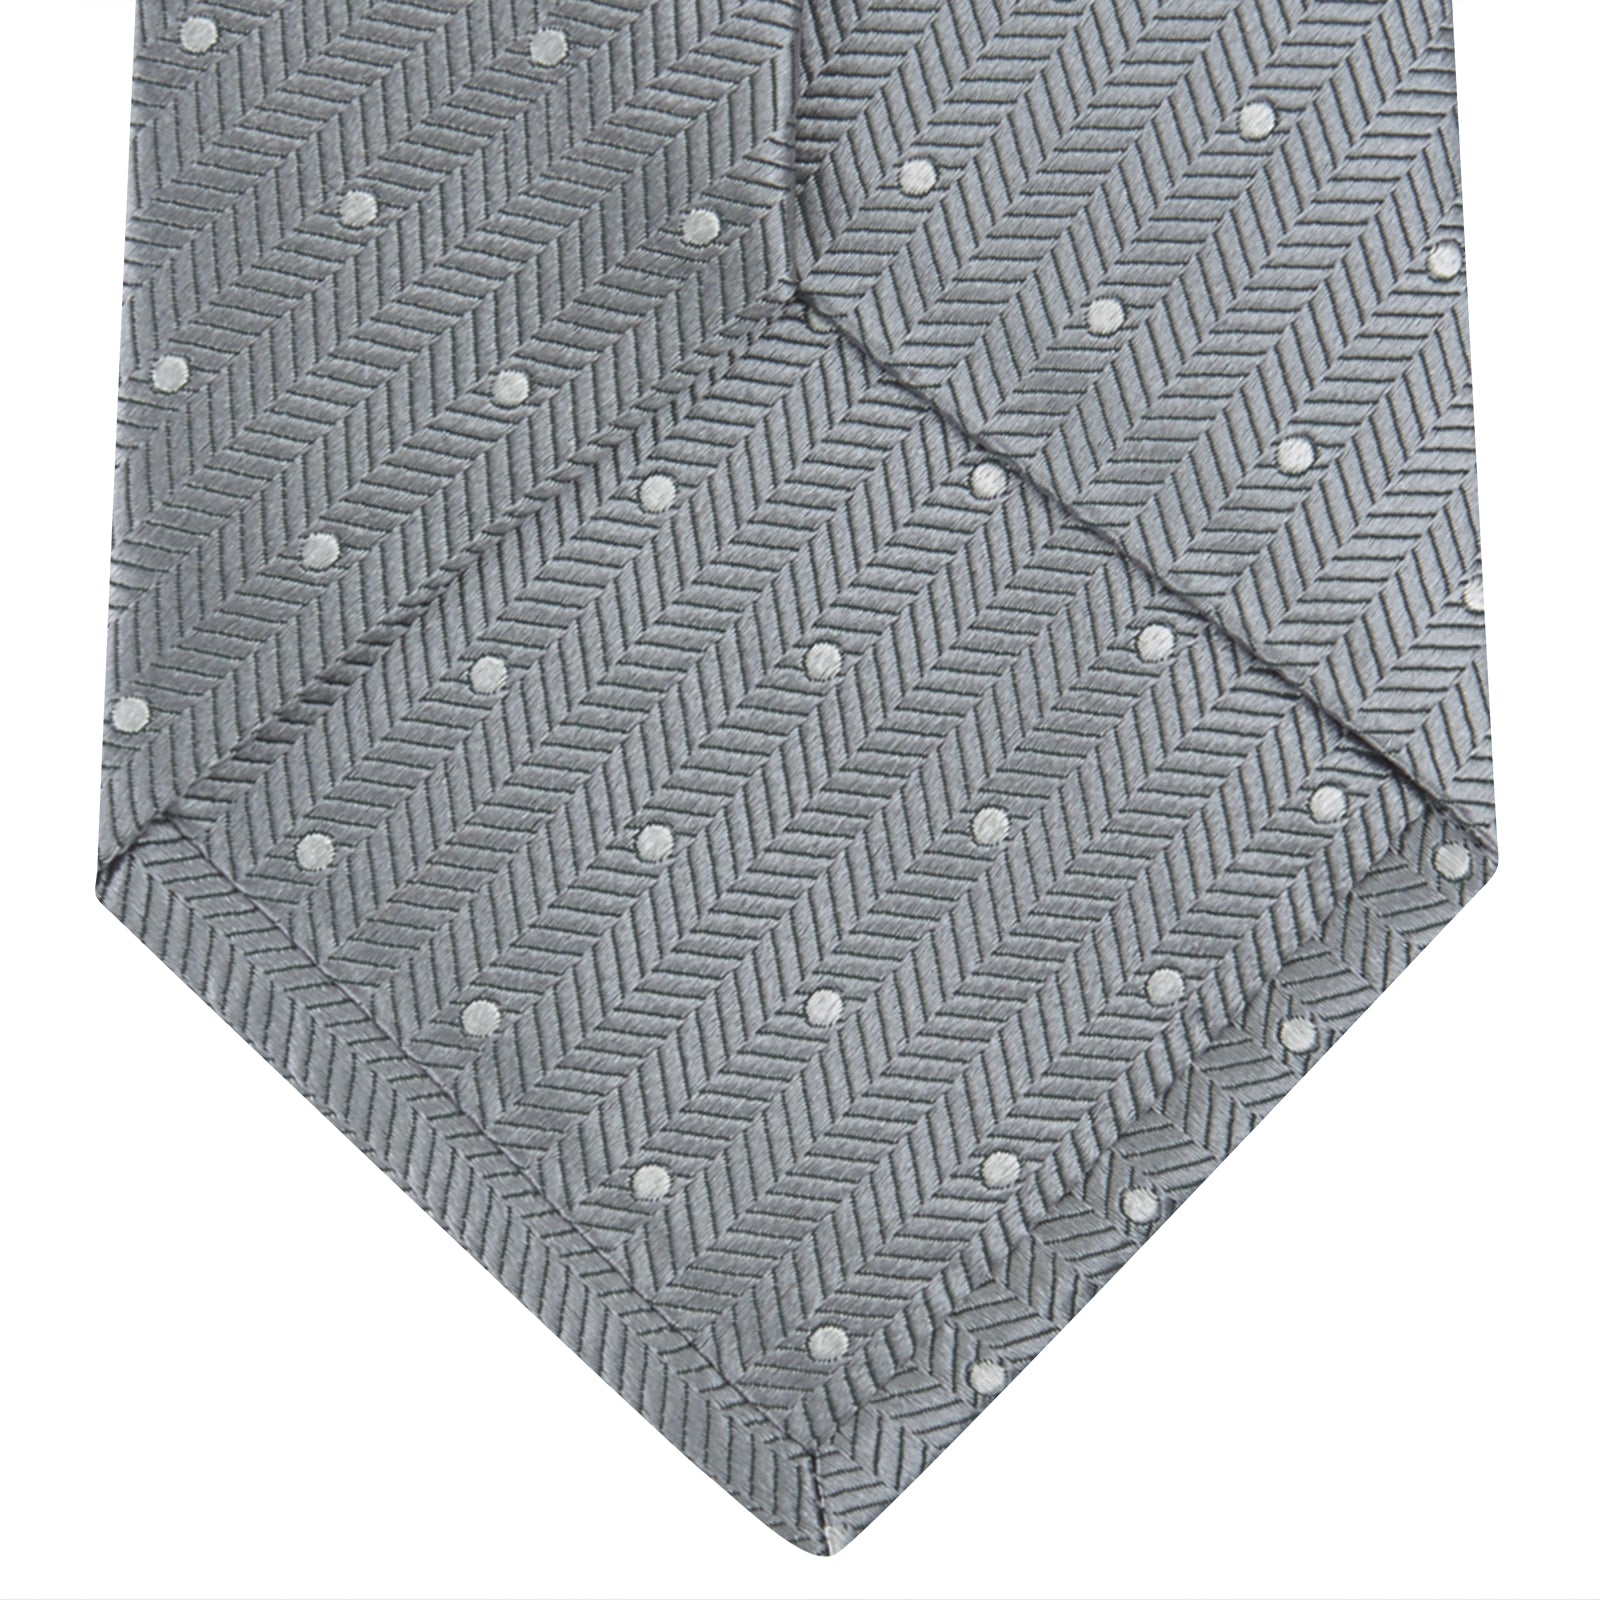 Grey and White Small Spot Herringbone Silk Tie